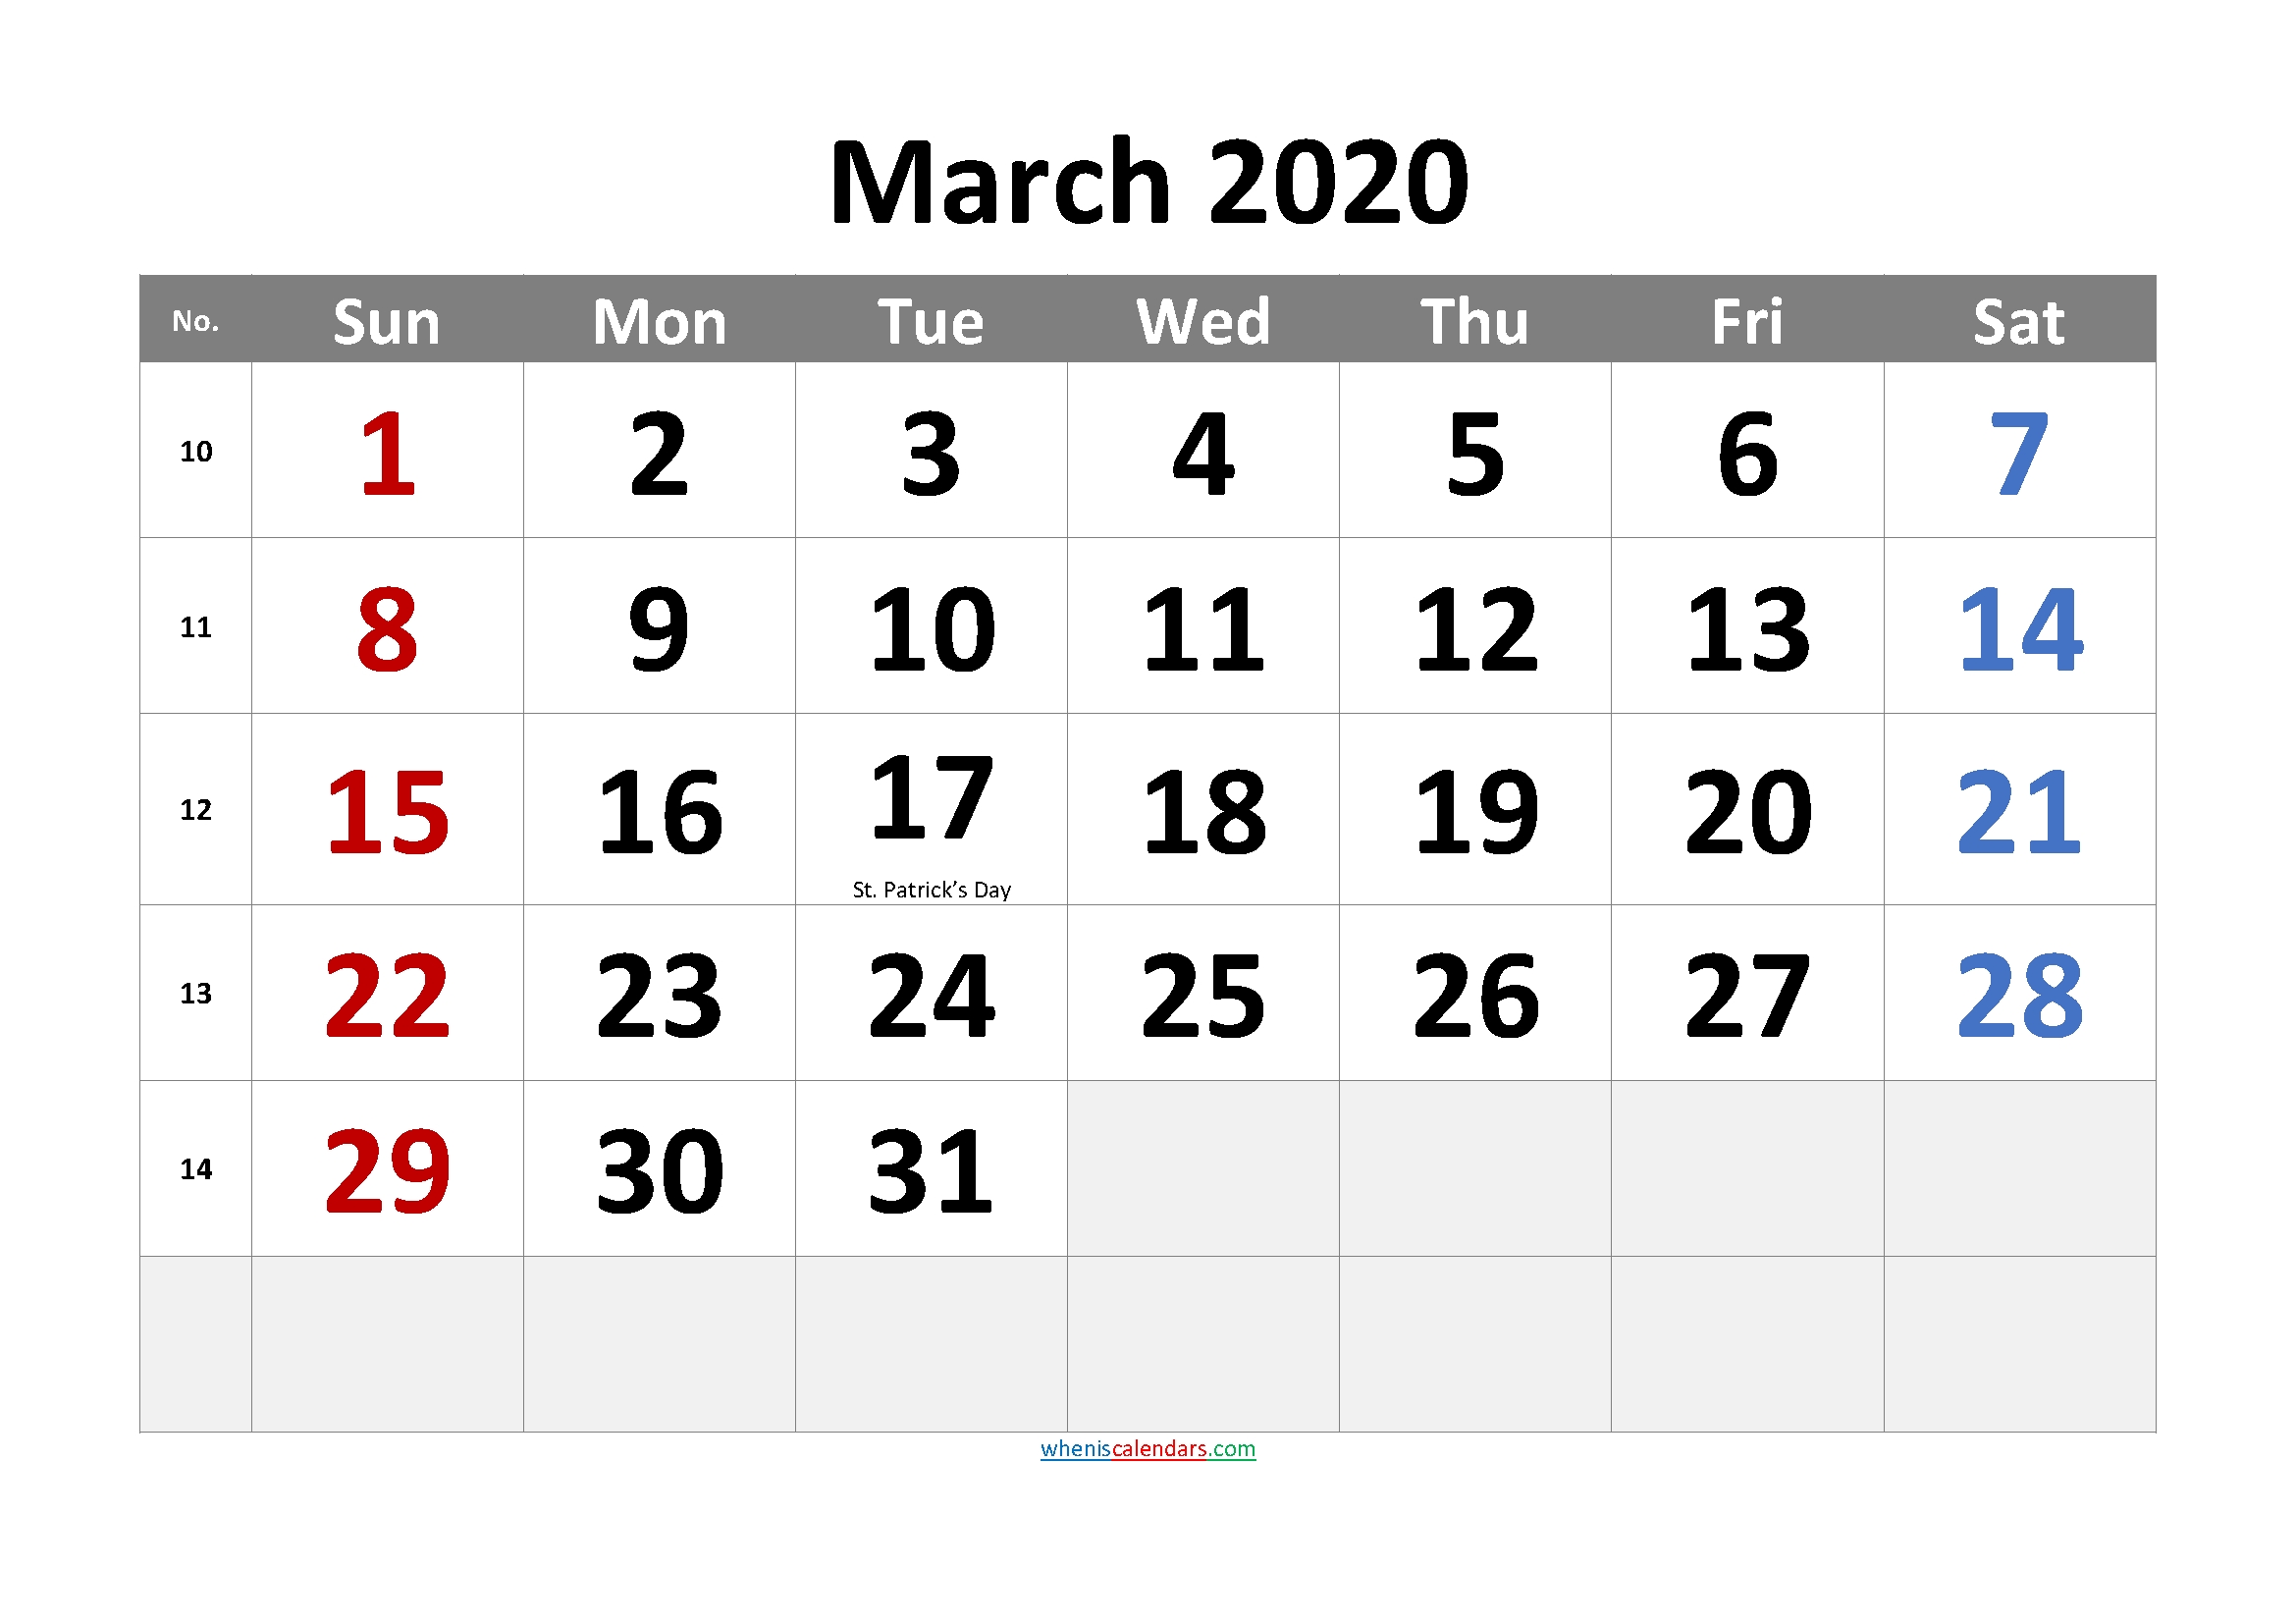 November 2020 Printable Calendar With Holidays - 6 Templates - Free Printable 2021 Monthly November 2020 - March 2021 Calendar